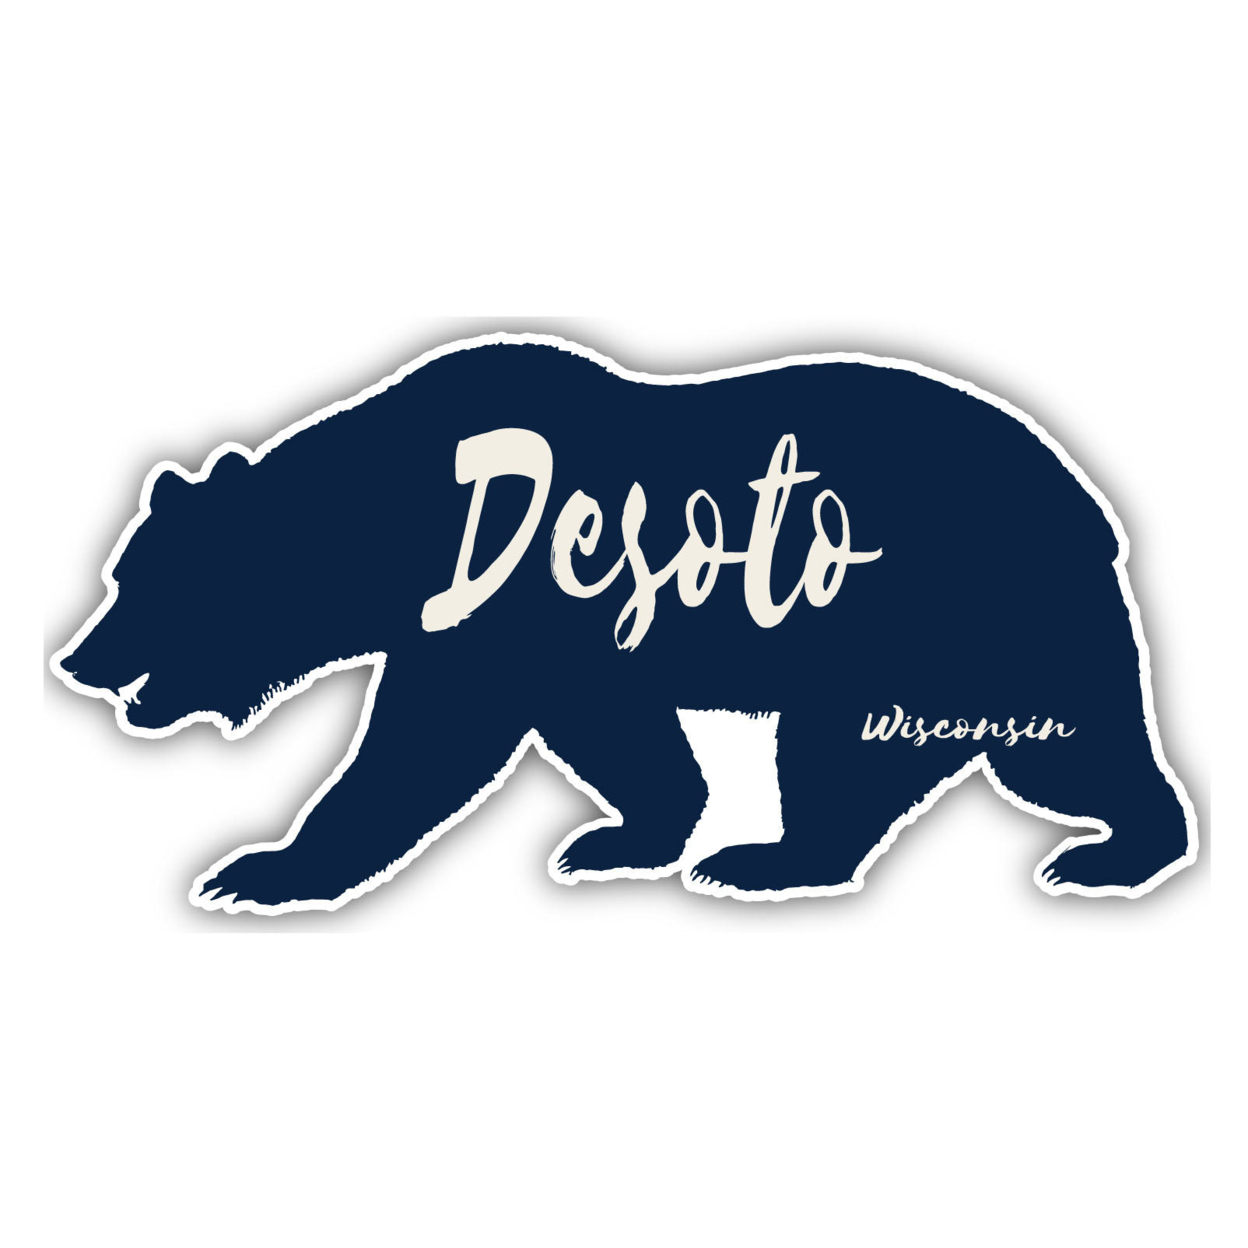 DeSoto Wisconsin Souvenir Decorative Stickers (Choose Theme And Size) - Single Unit, 6-Inch, Bear